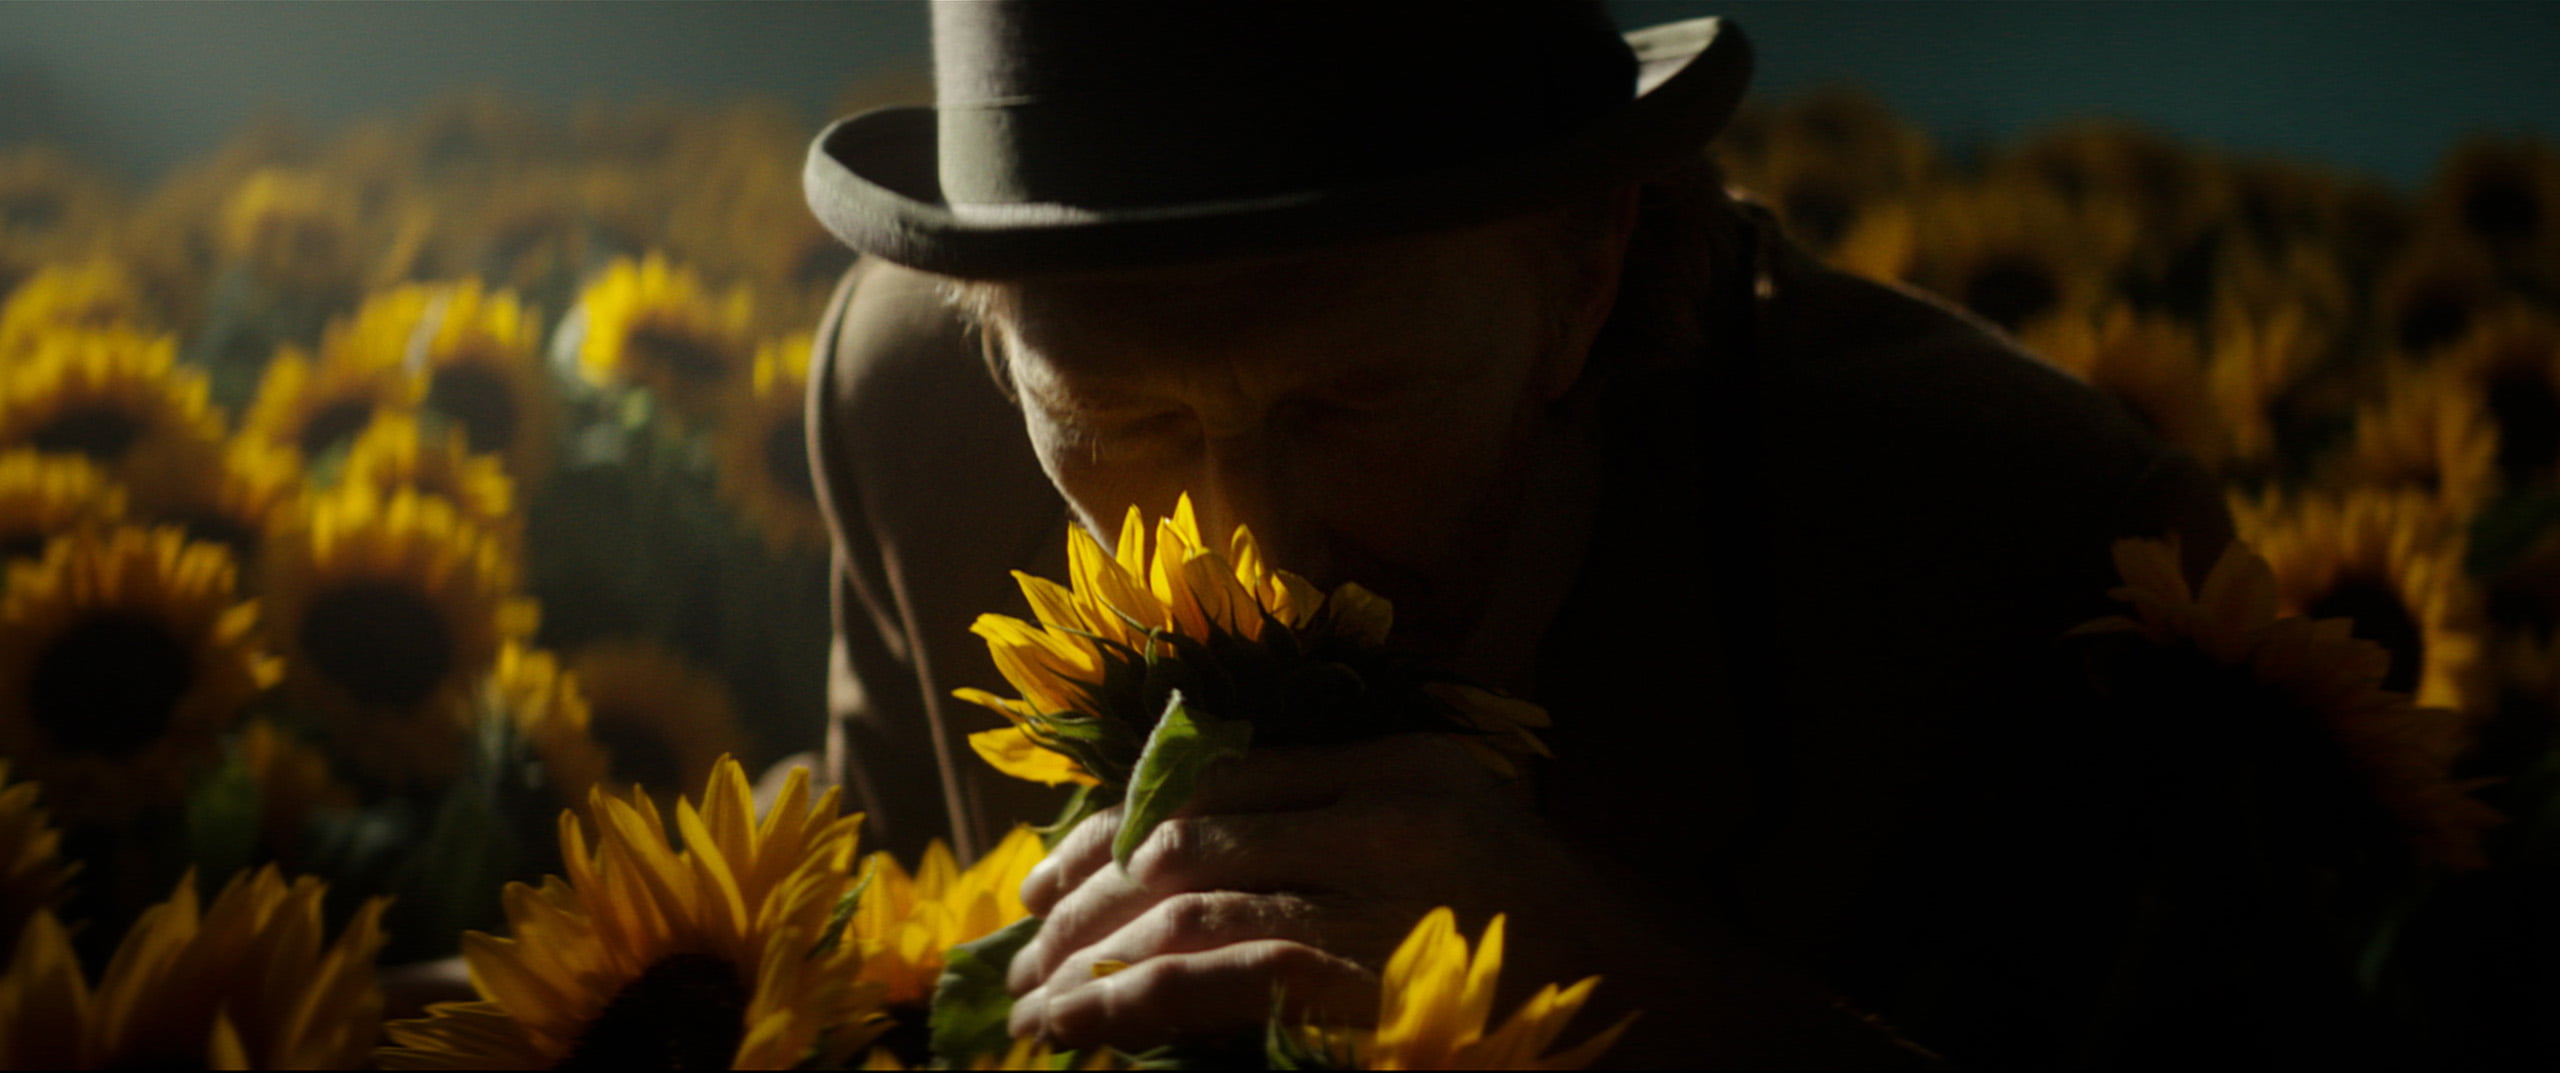 Vincent van Gogh_sunflowers